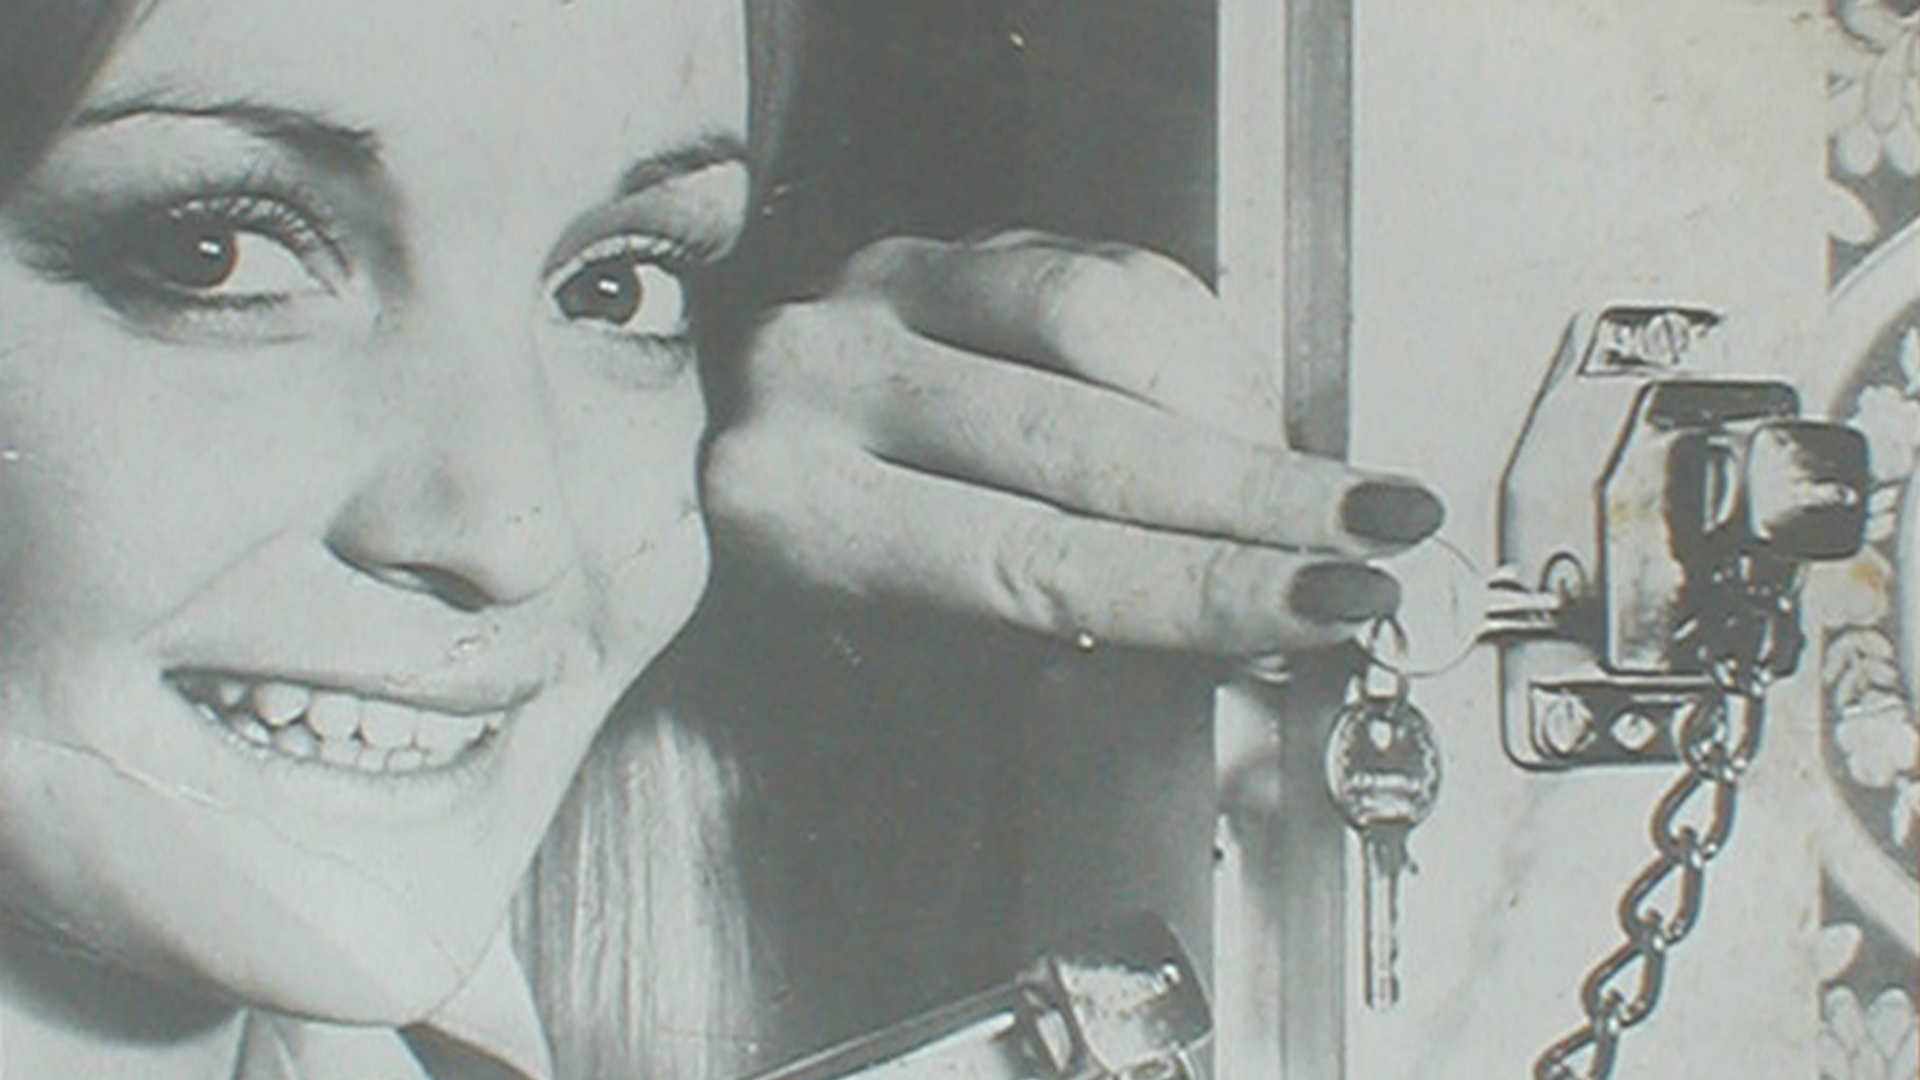 A woman locking an additional door lock © ABUS